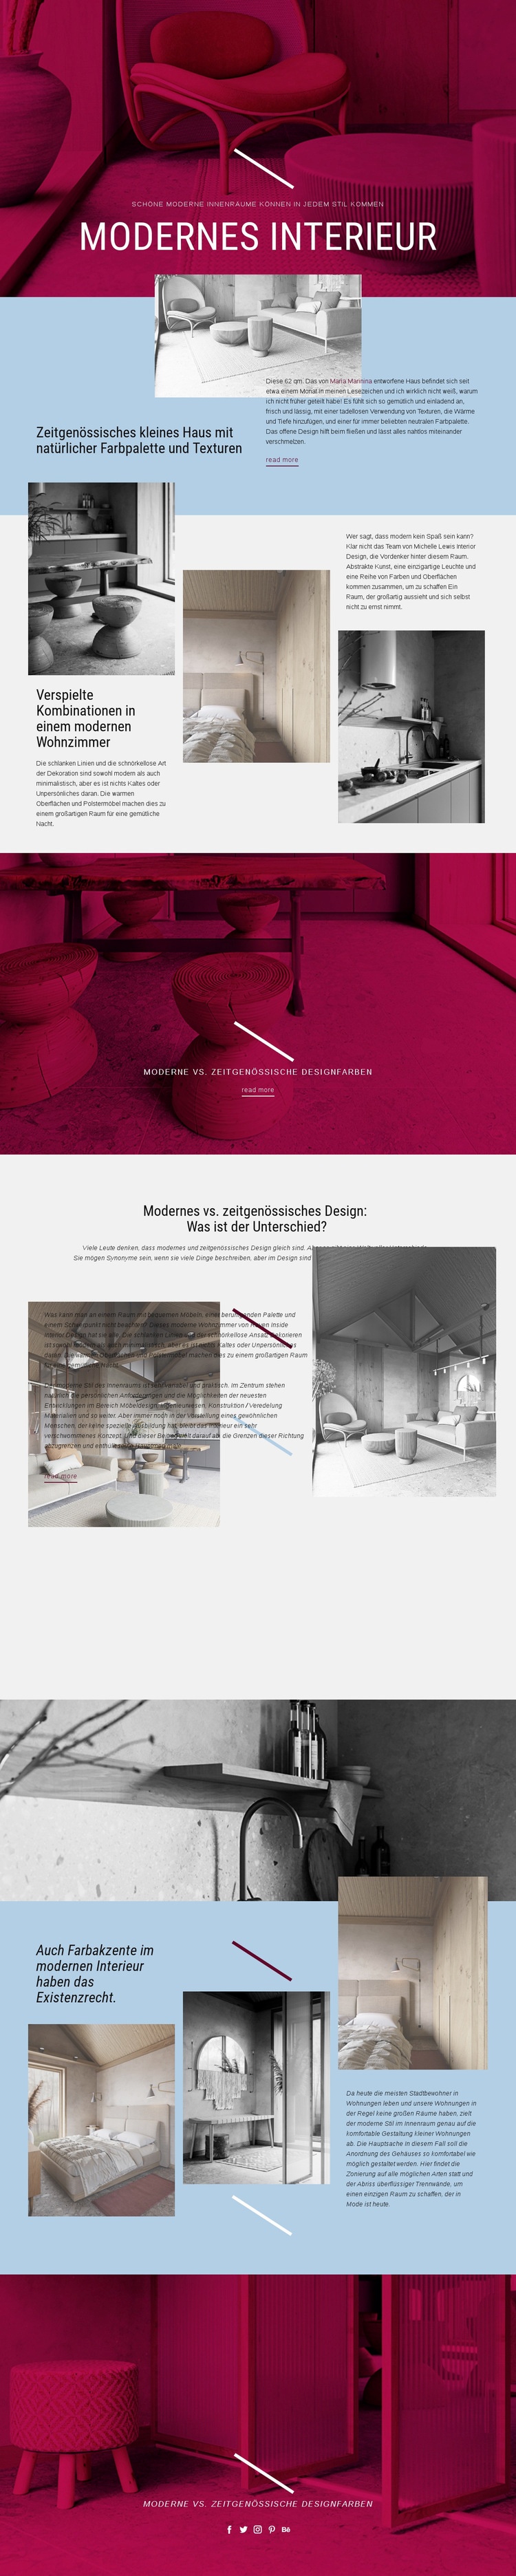 Modernes Interieur Website design